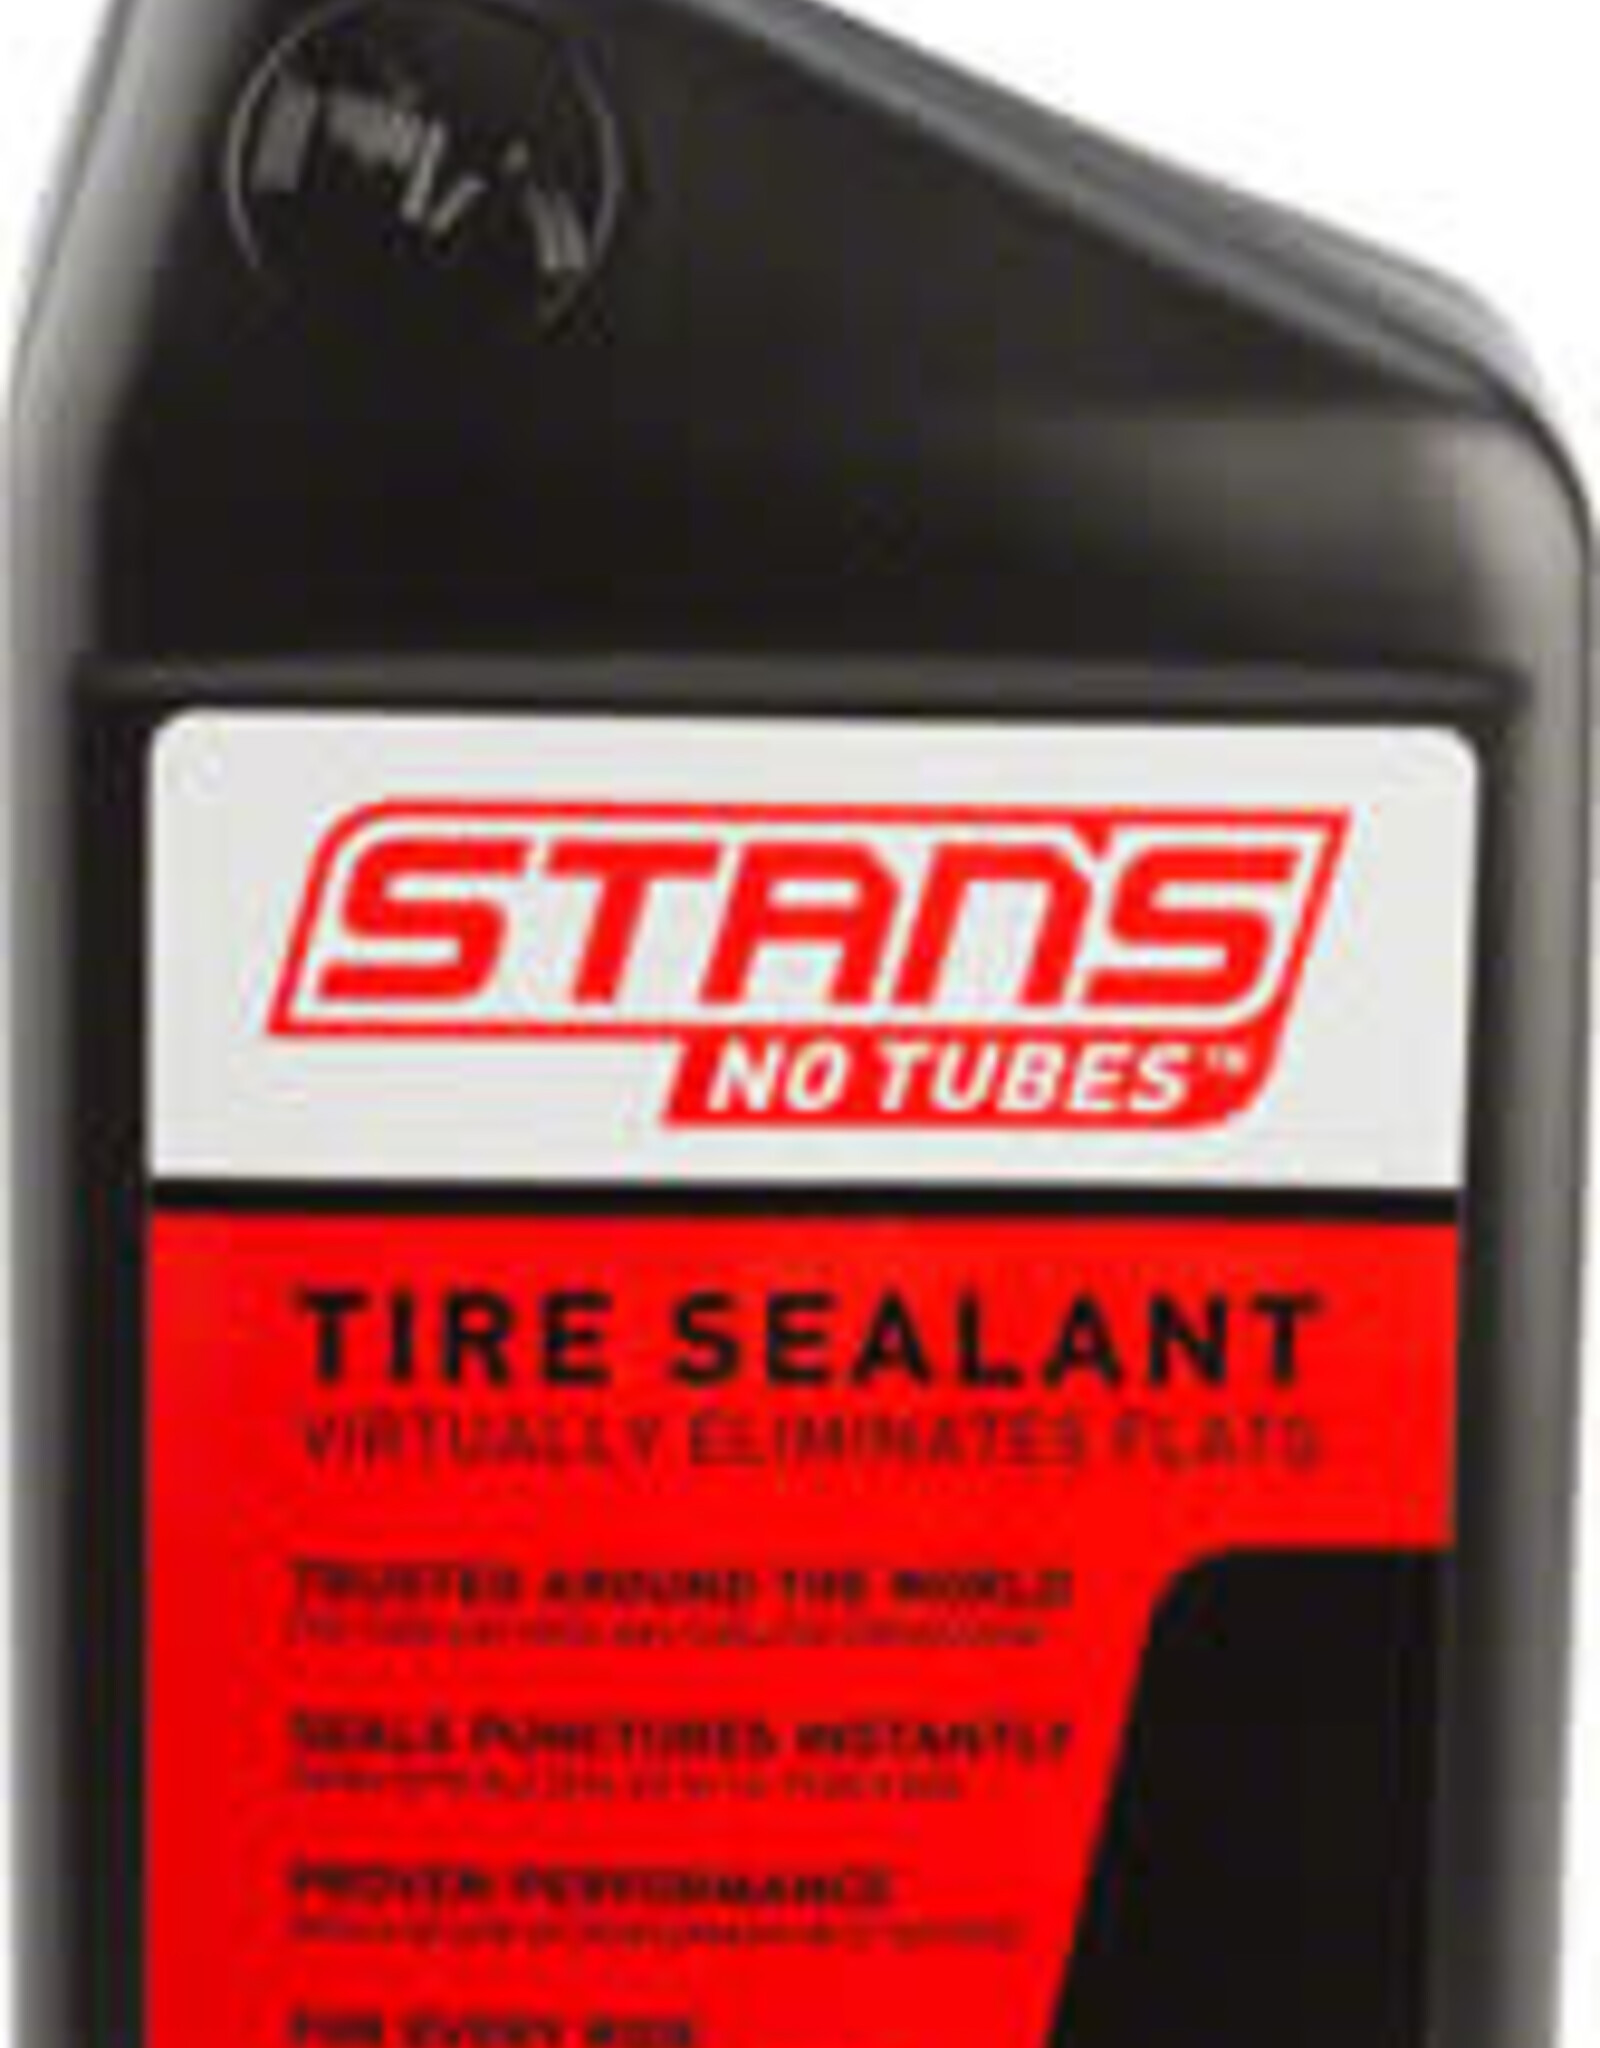 Stan's NoTubes Tubeless Tire Sealant - 32oz